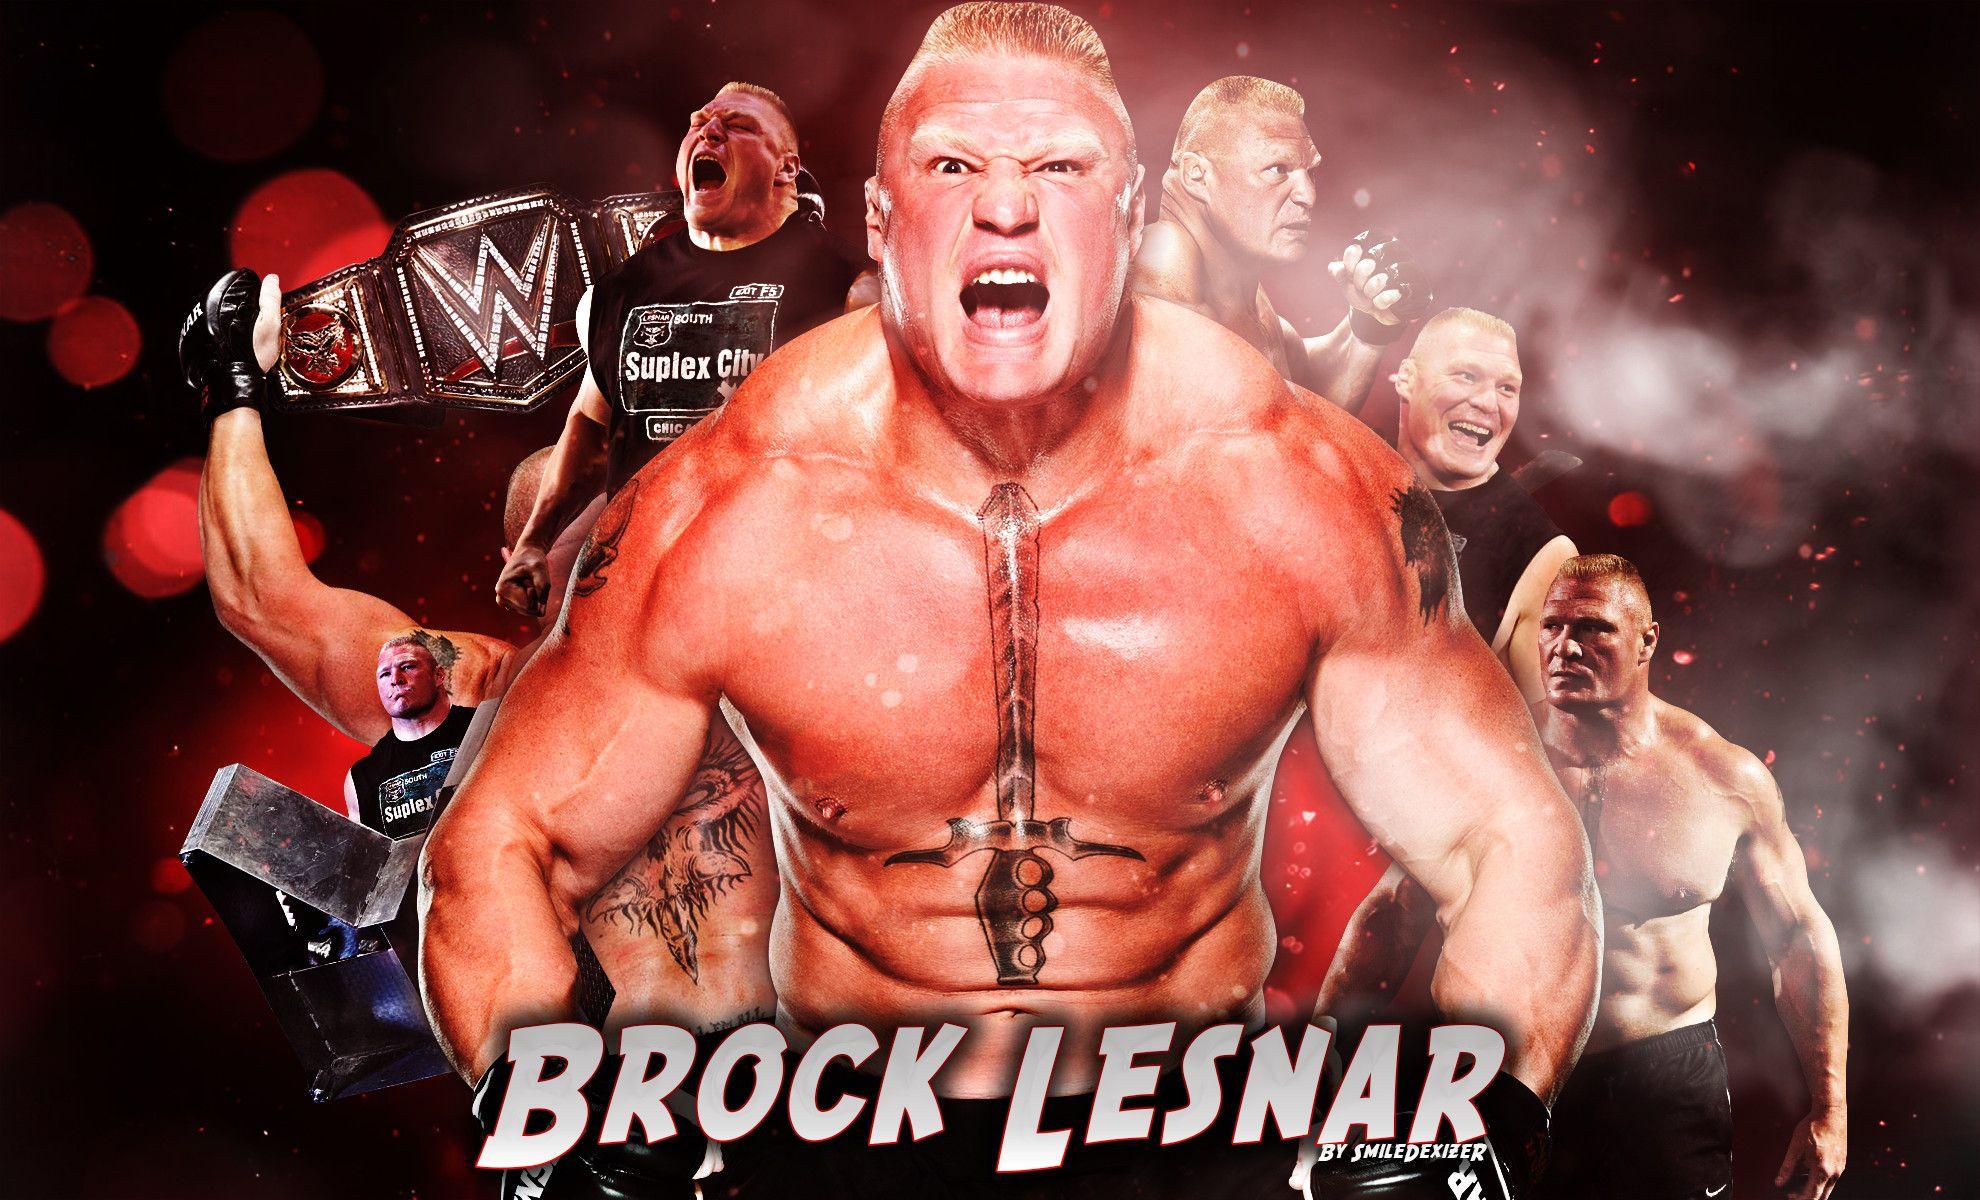 Wwe Brock Lesnar Wallpaper background picture